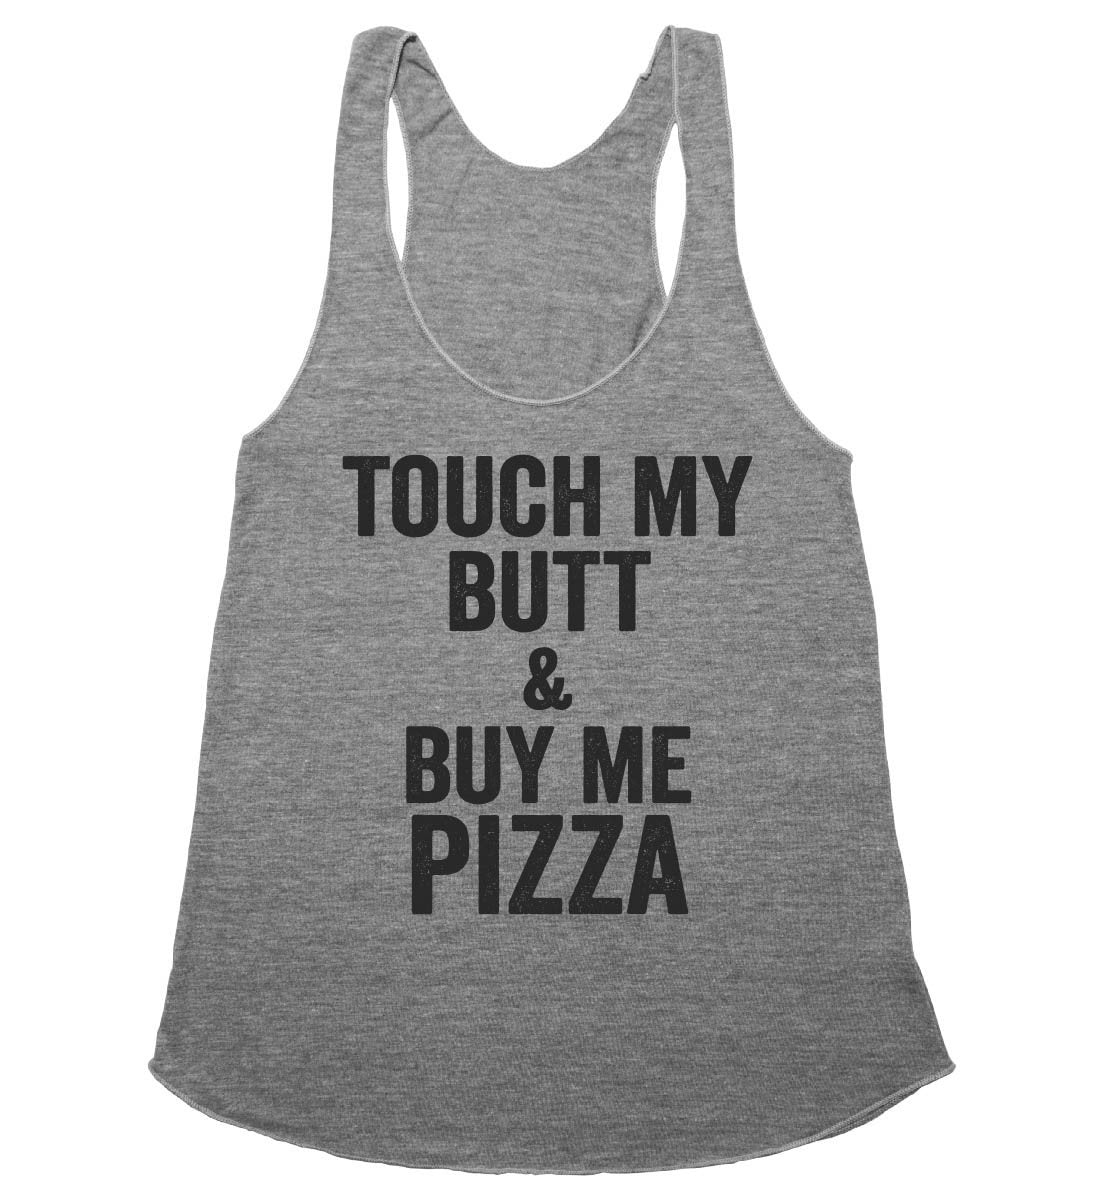 touch my butt & buy me pizza racerback top shirt - Shirtoopia